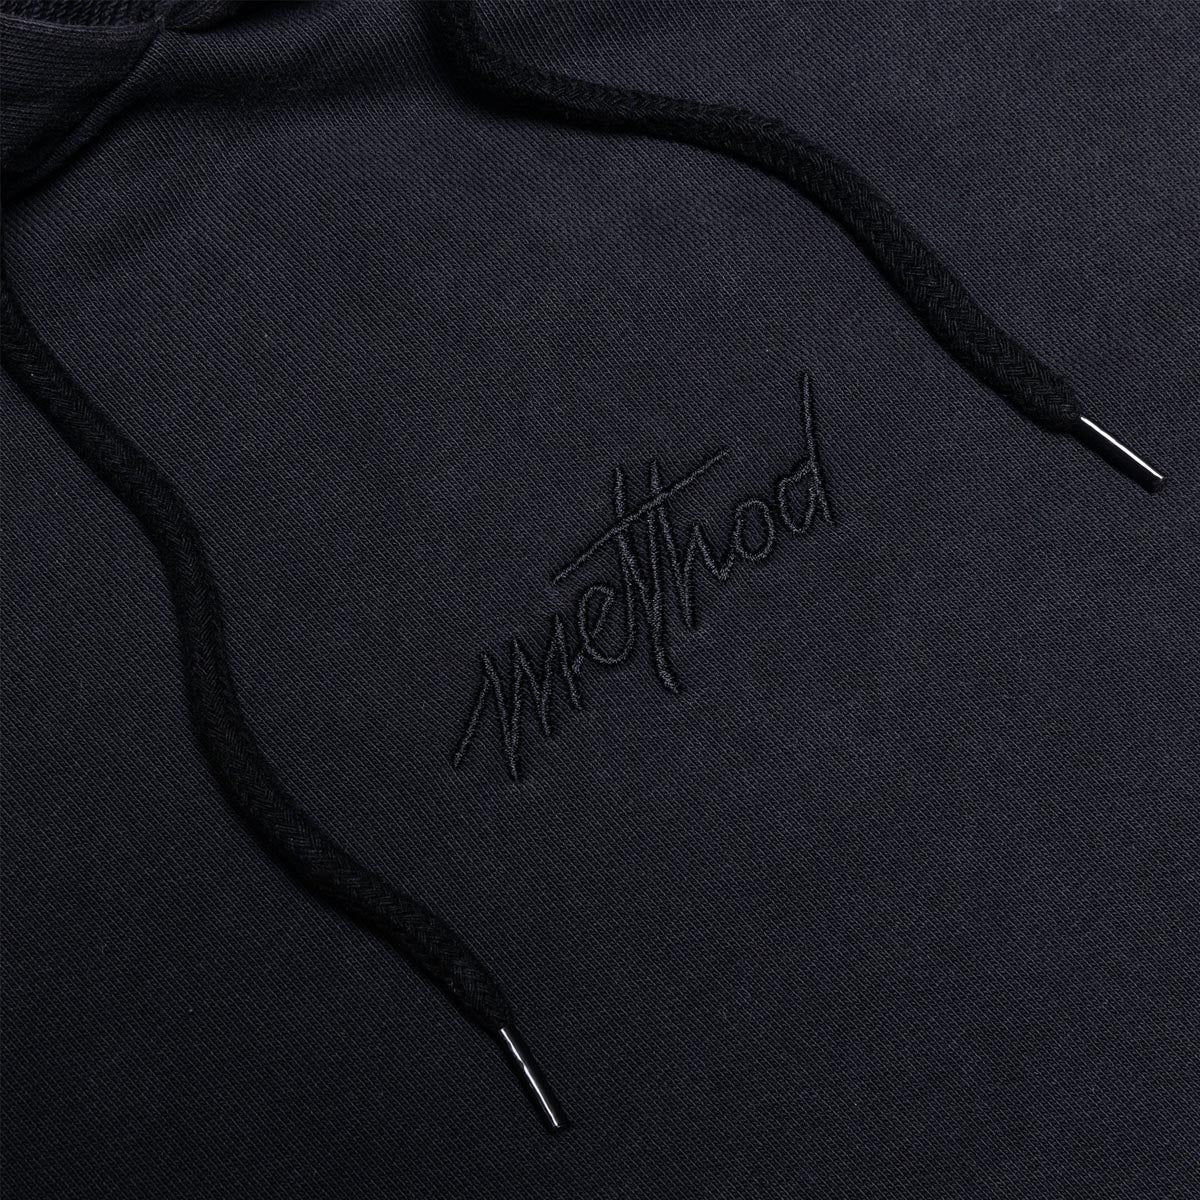 Method Signature Hoodie - Washed Black image 2